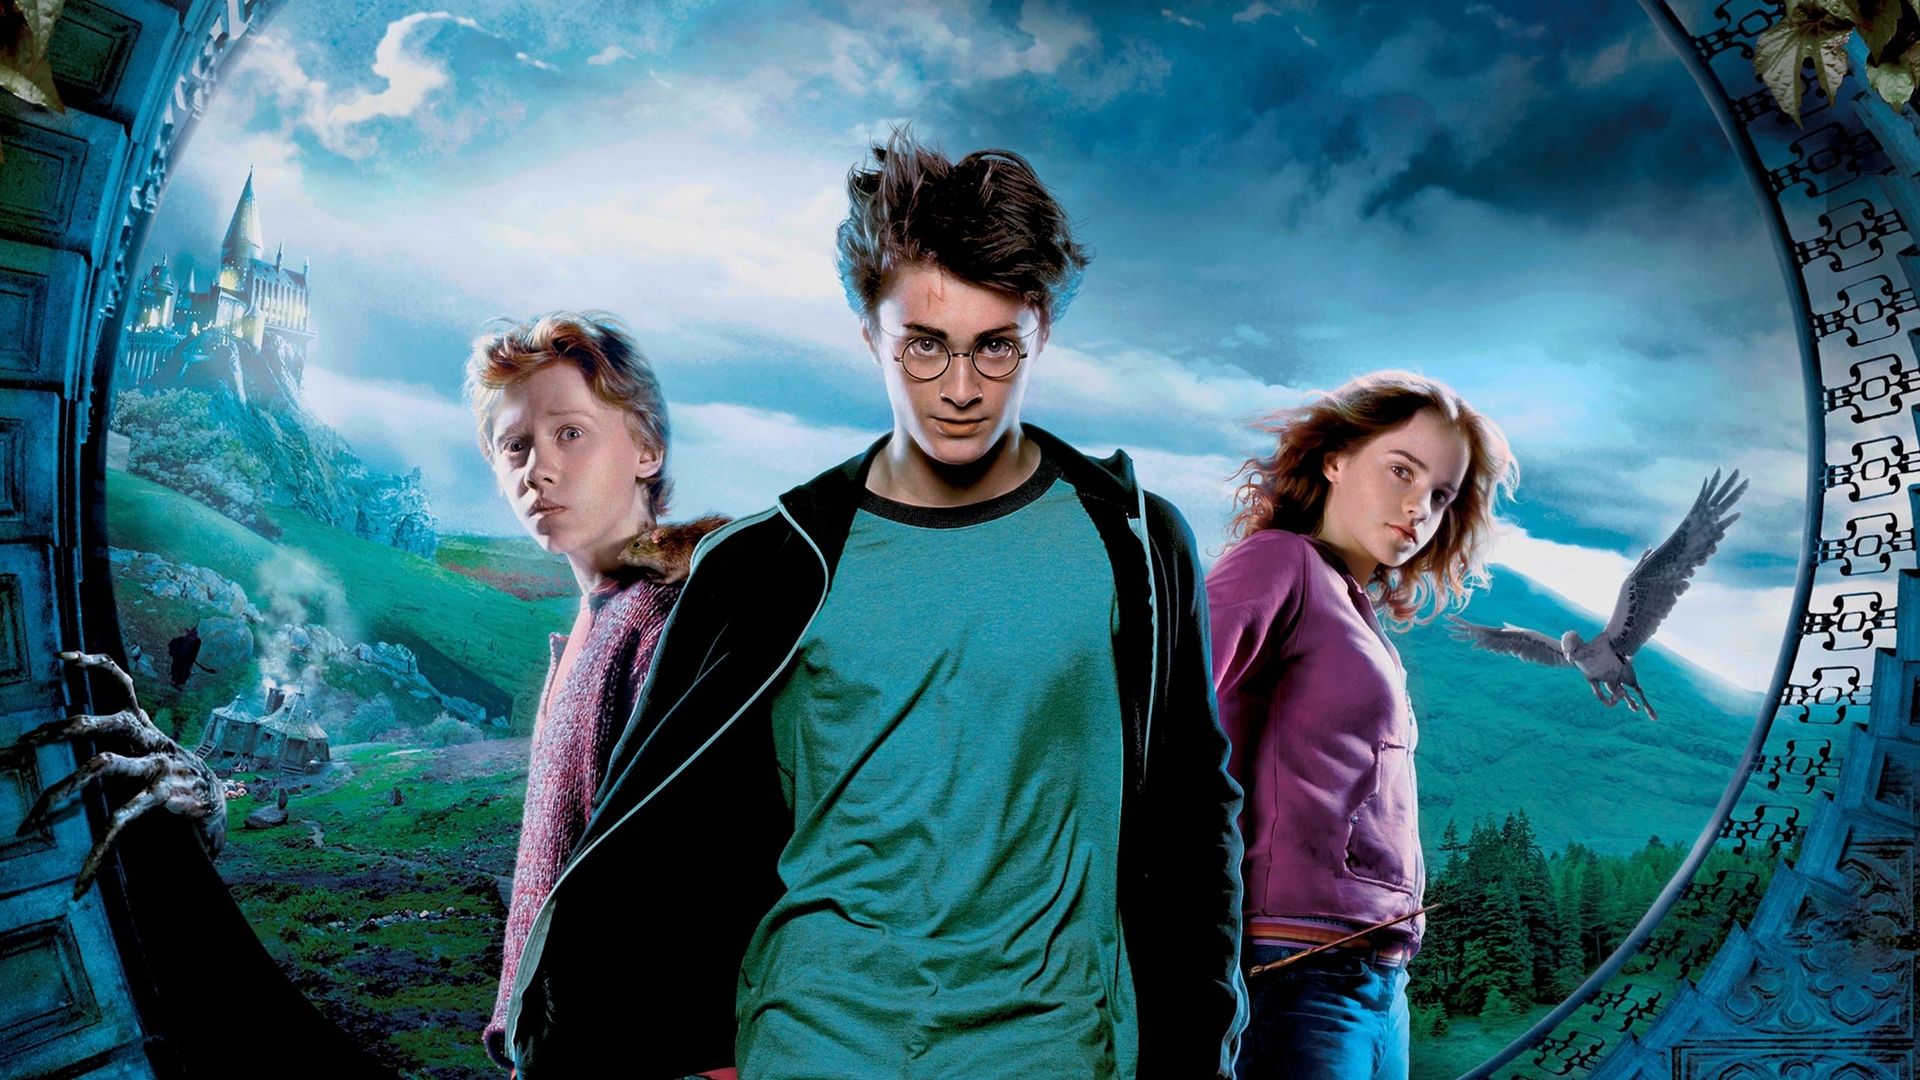 Harry Potter and the Prisoner of Azkaban Backdrop